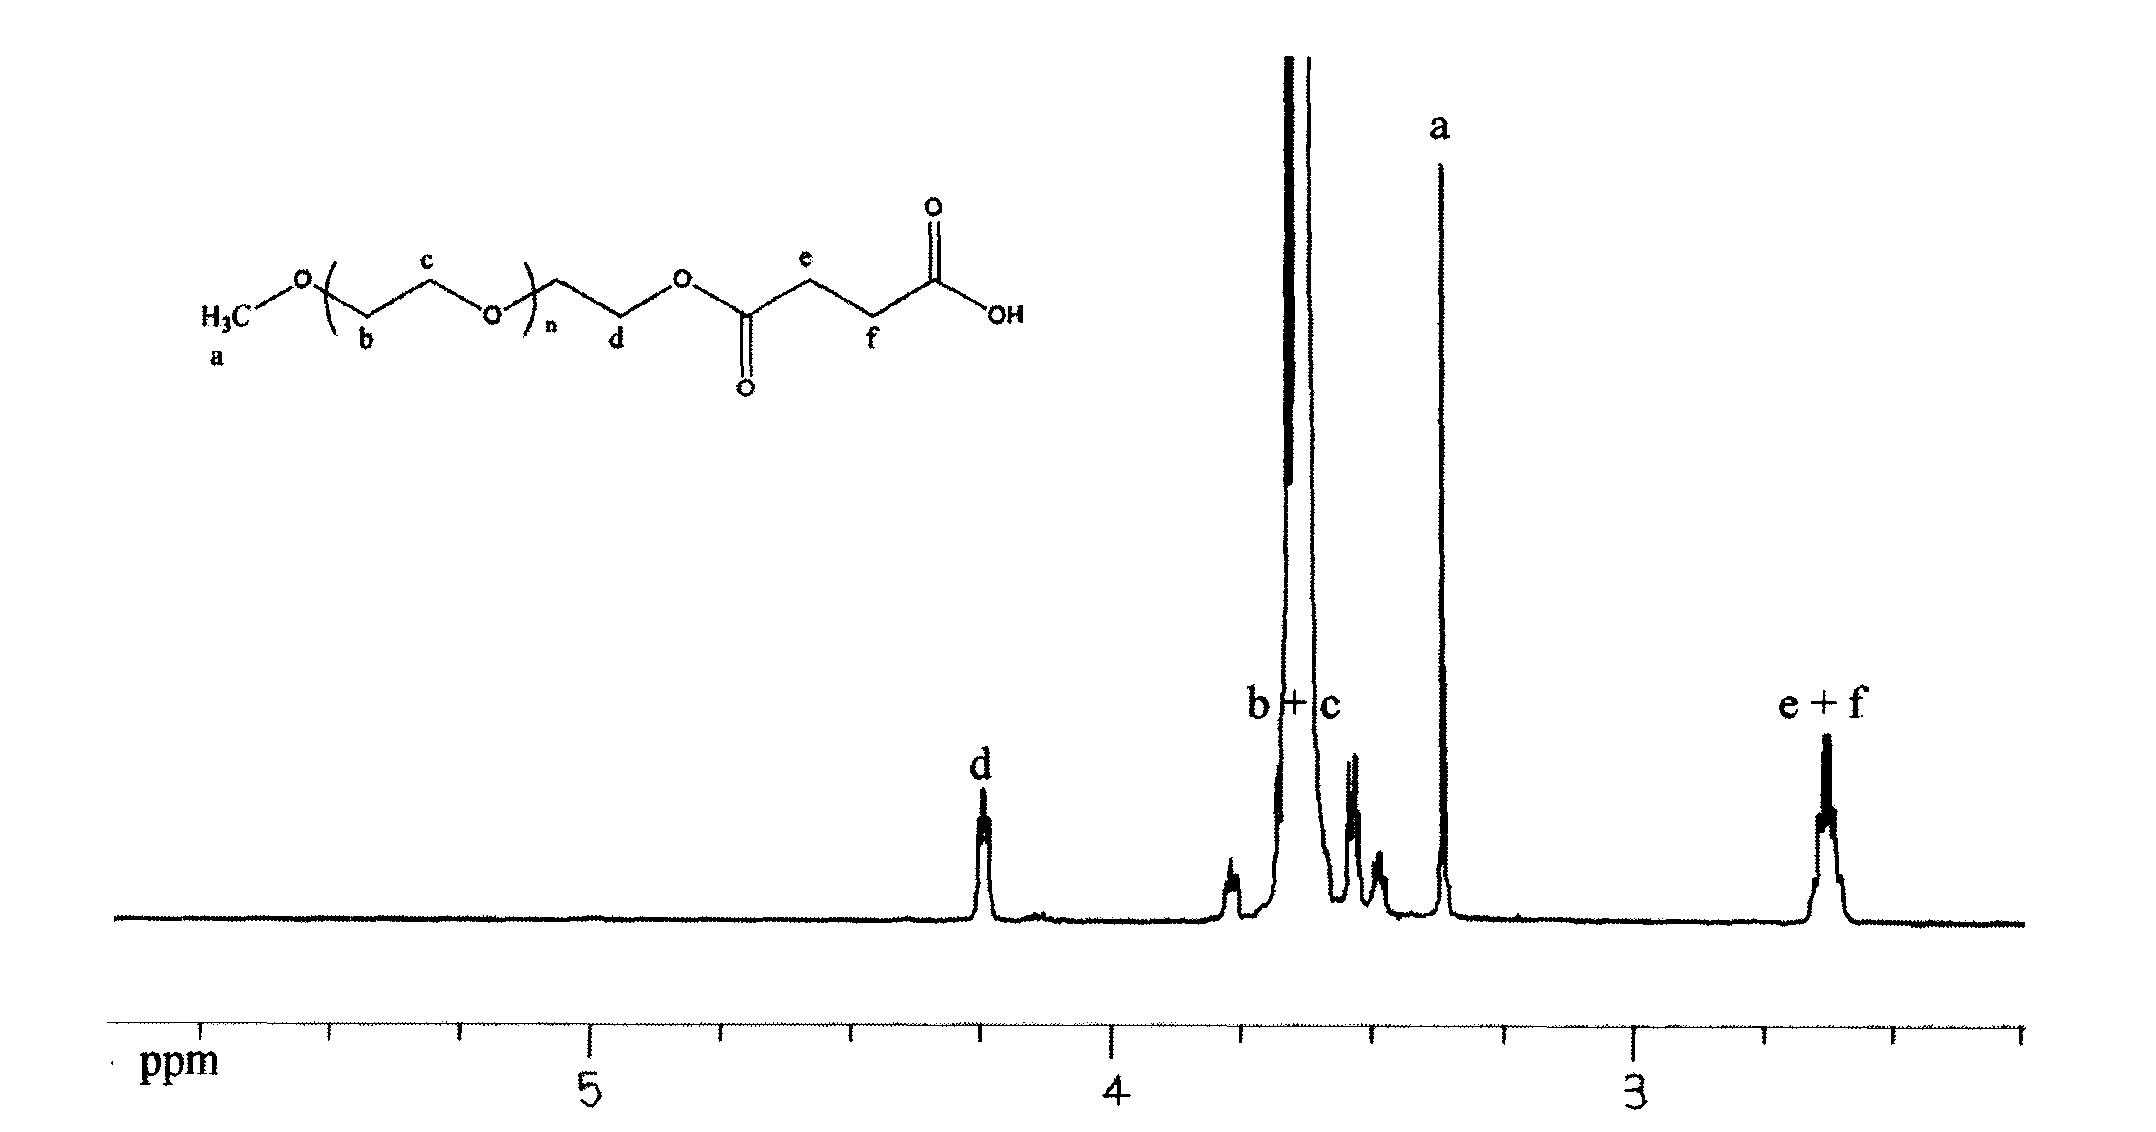 Conjugate conjugated from polyethylene glycol and curcumin derivative